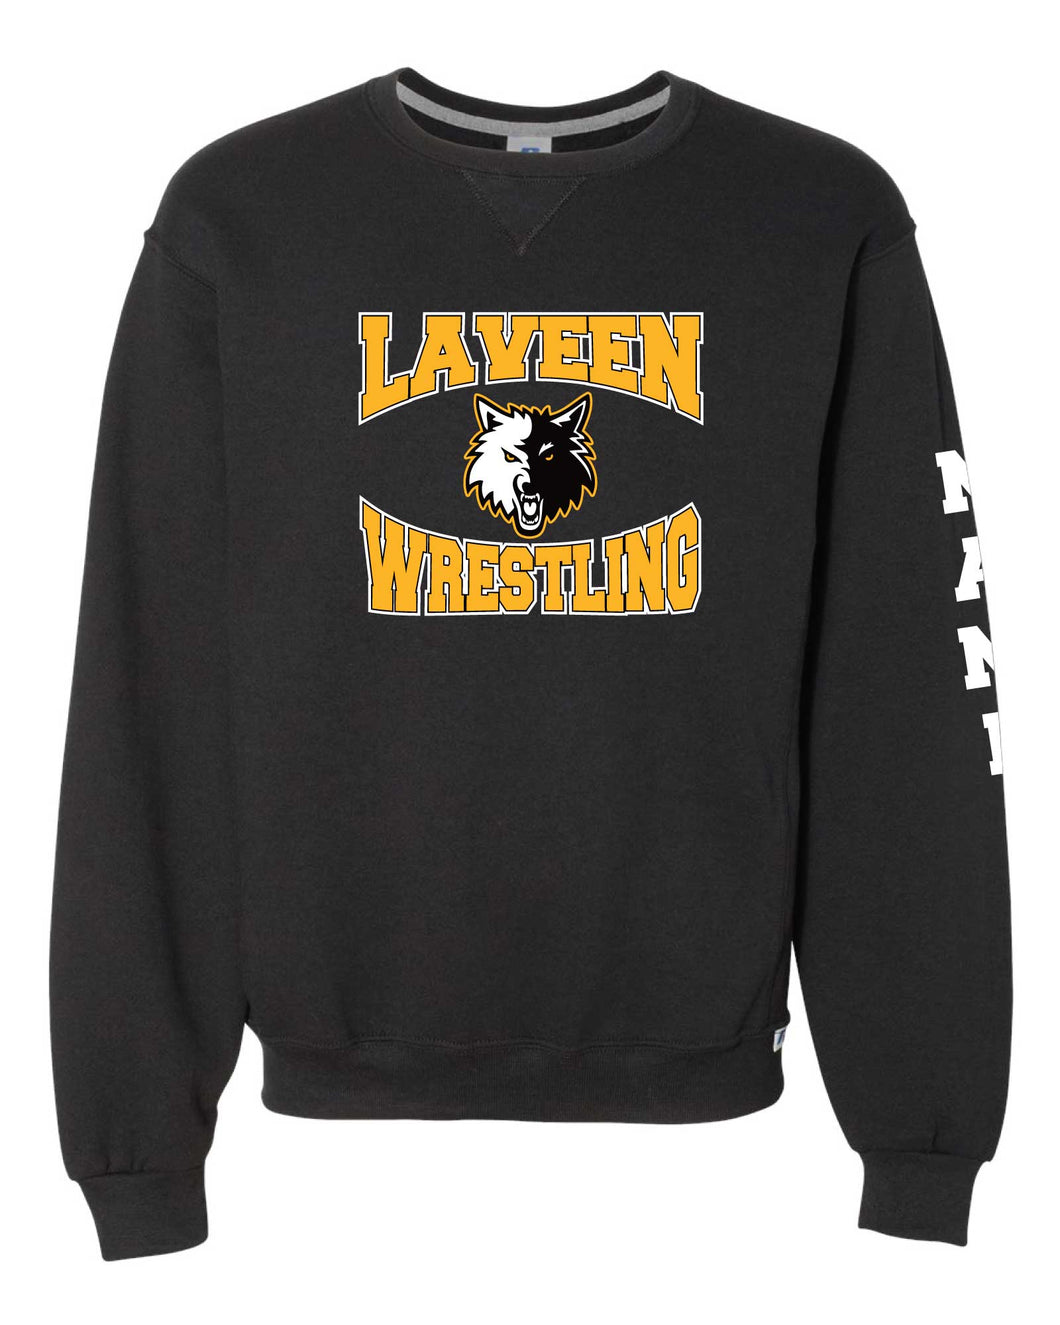 Laveen Wrestling Russell Athletic Cotton Crewneck Sweatshirt - Black